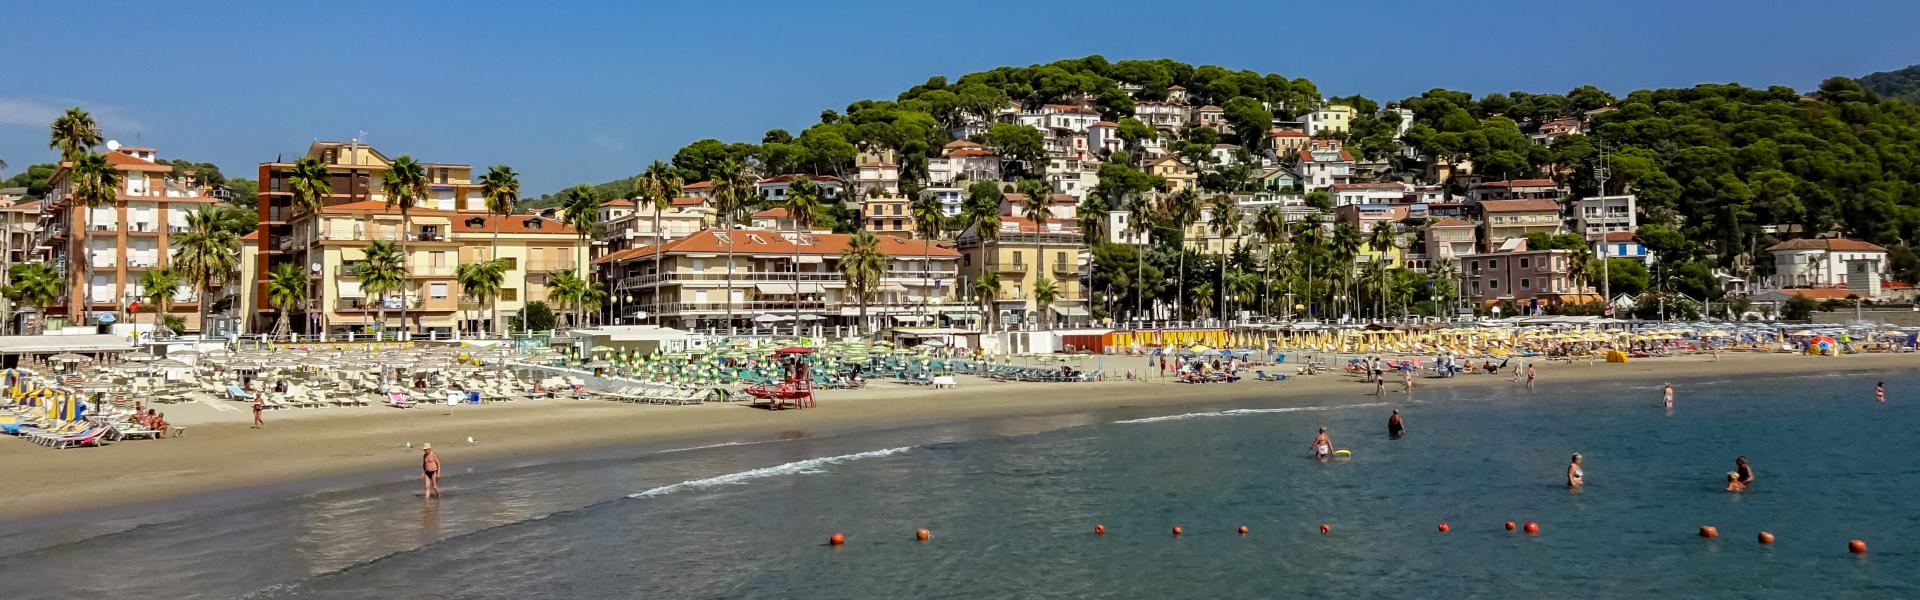 Case vacanze e appartamenti a Marina Di Andora in affitto - CaseVacanza.it